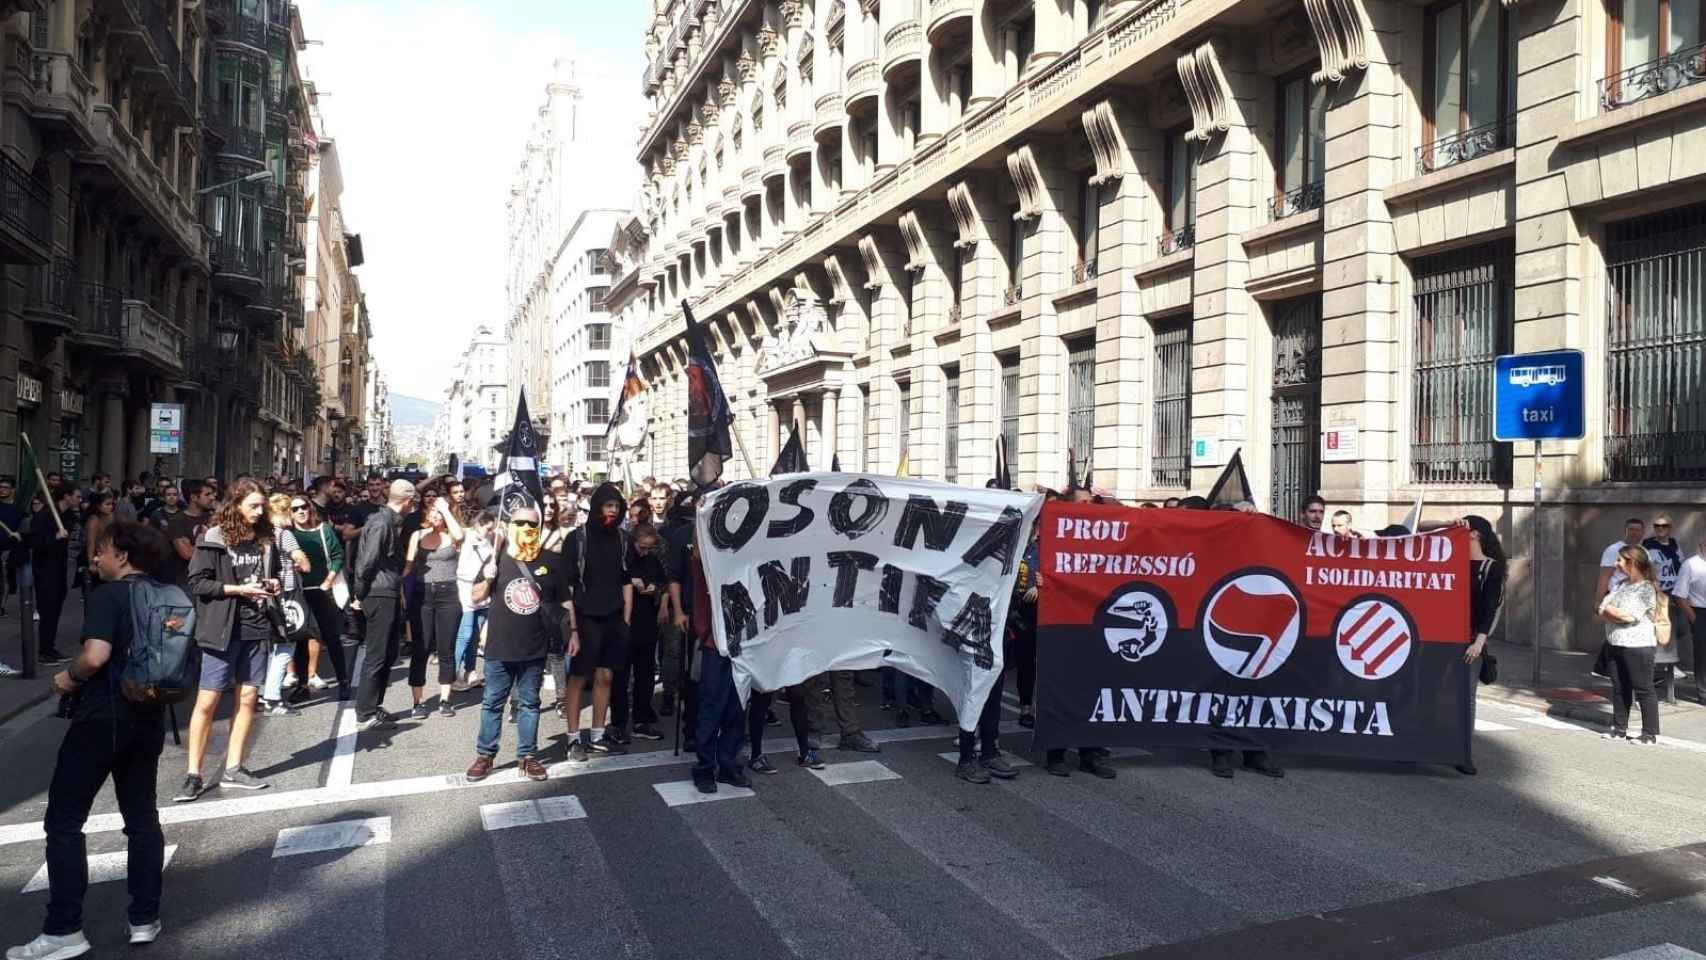 Centenares de antifascistas se manifiestan en la via Laietana / PLATAFORMA ANTIFASCISTA BARCELONA vía TWITTER